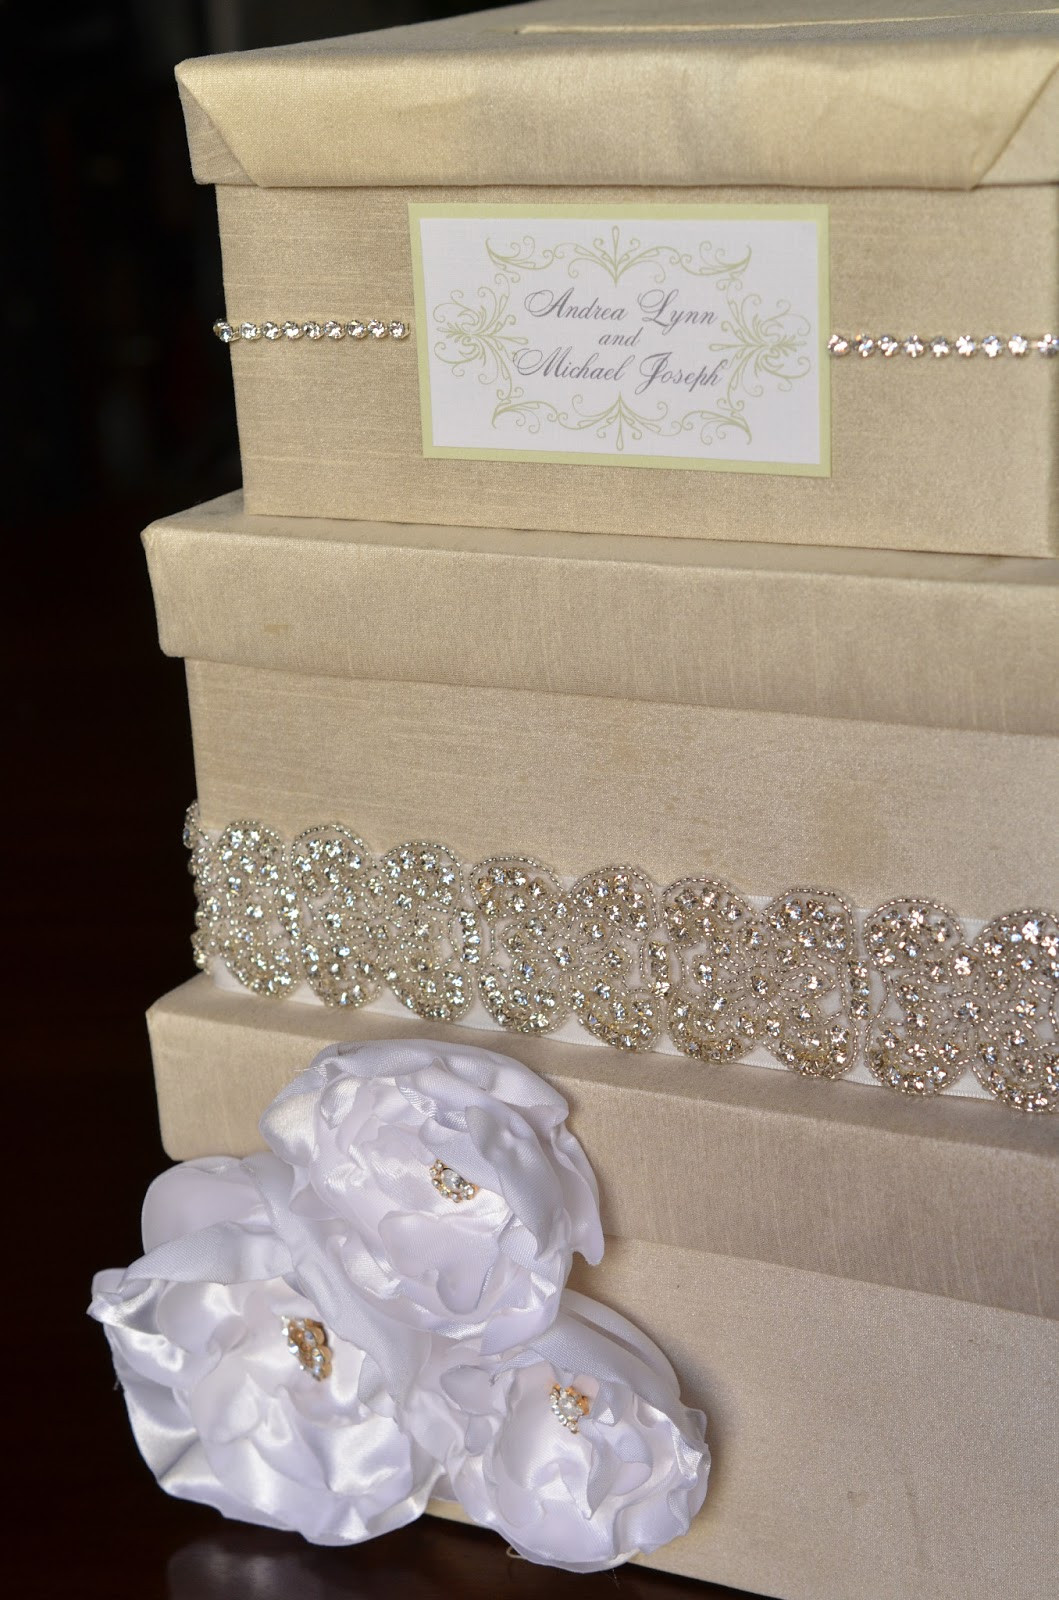 Best ideas about DIY Wedding Card
. Save or Pin DIY Wedding Card Box Tutorial Andrea Lynn HANDMADE Now.